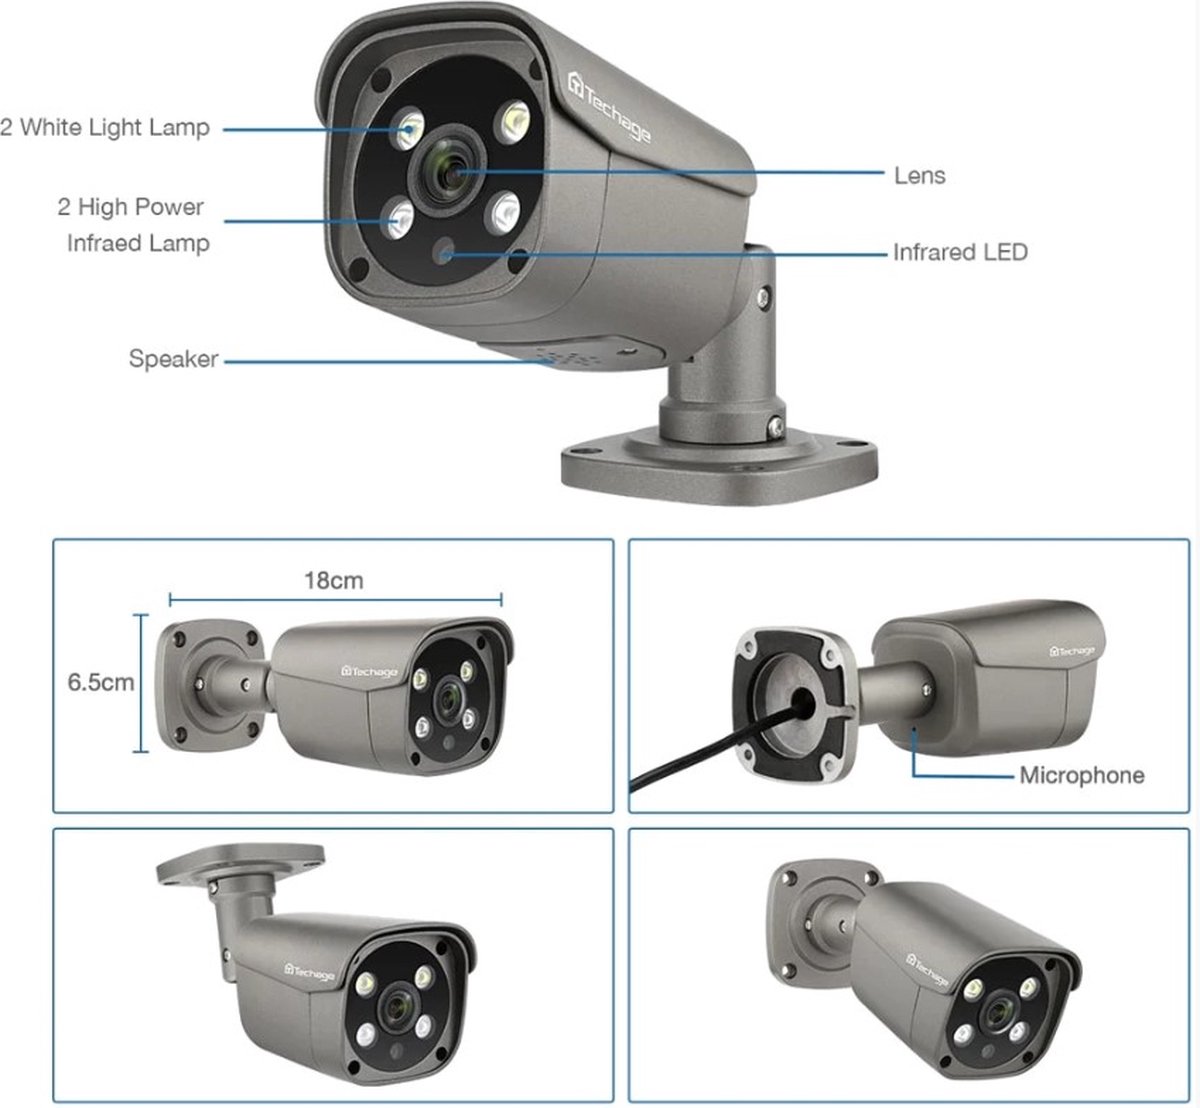 Techage 5mp Ultra-HD Beveiligingscamera - Buiten Camera - Ultra HD - Waterdicht - CMOS Sensor - Bewegingsdetectie - Zwart